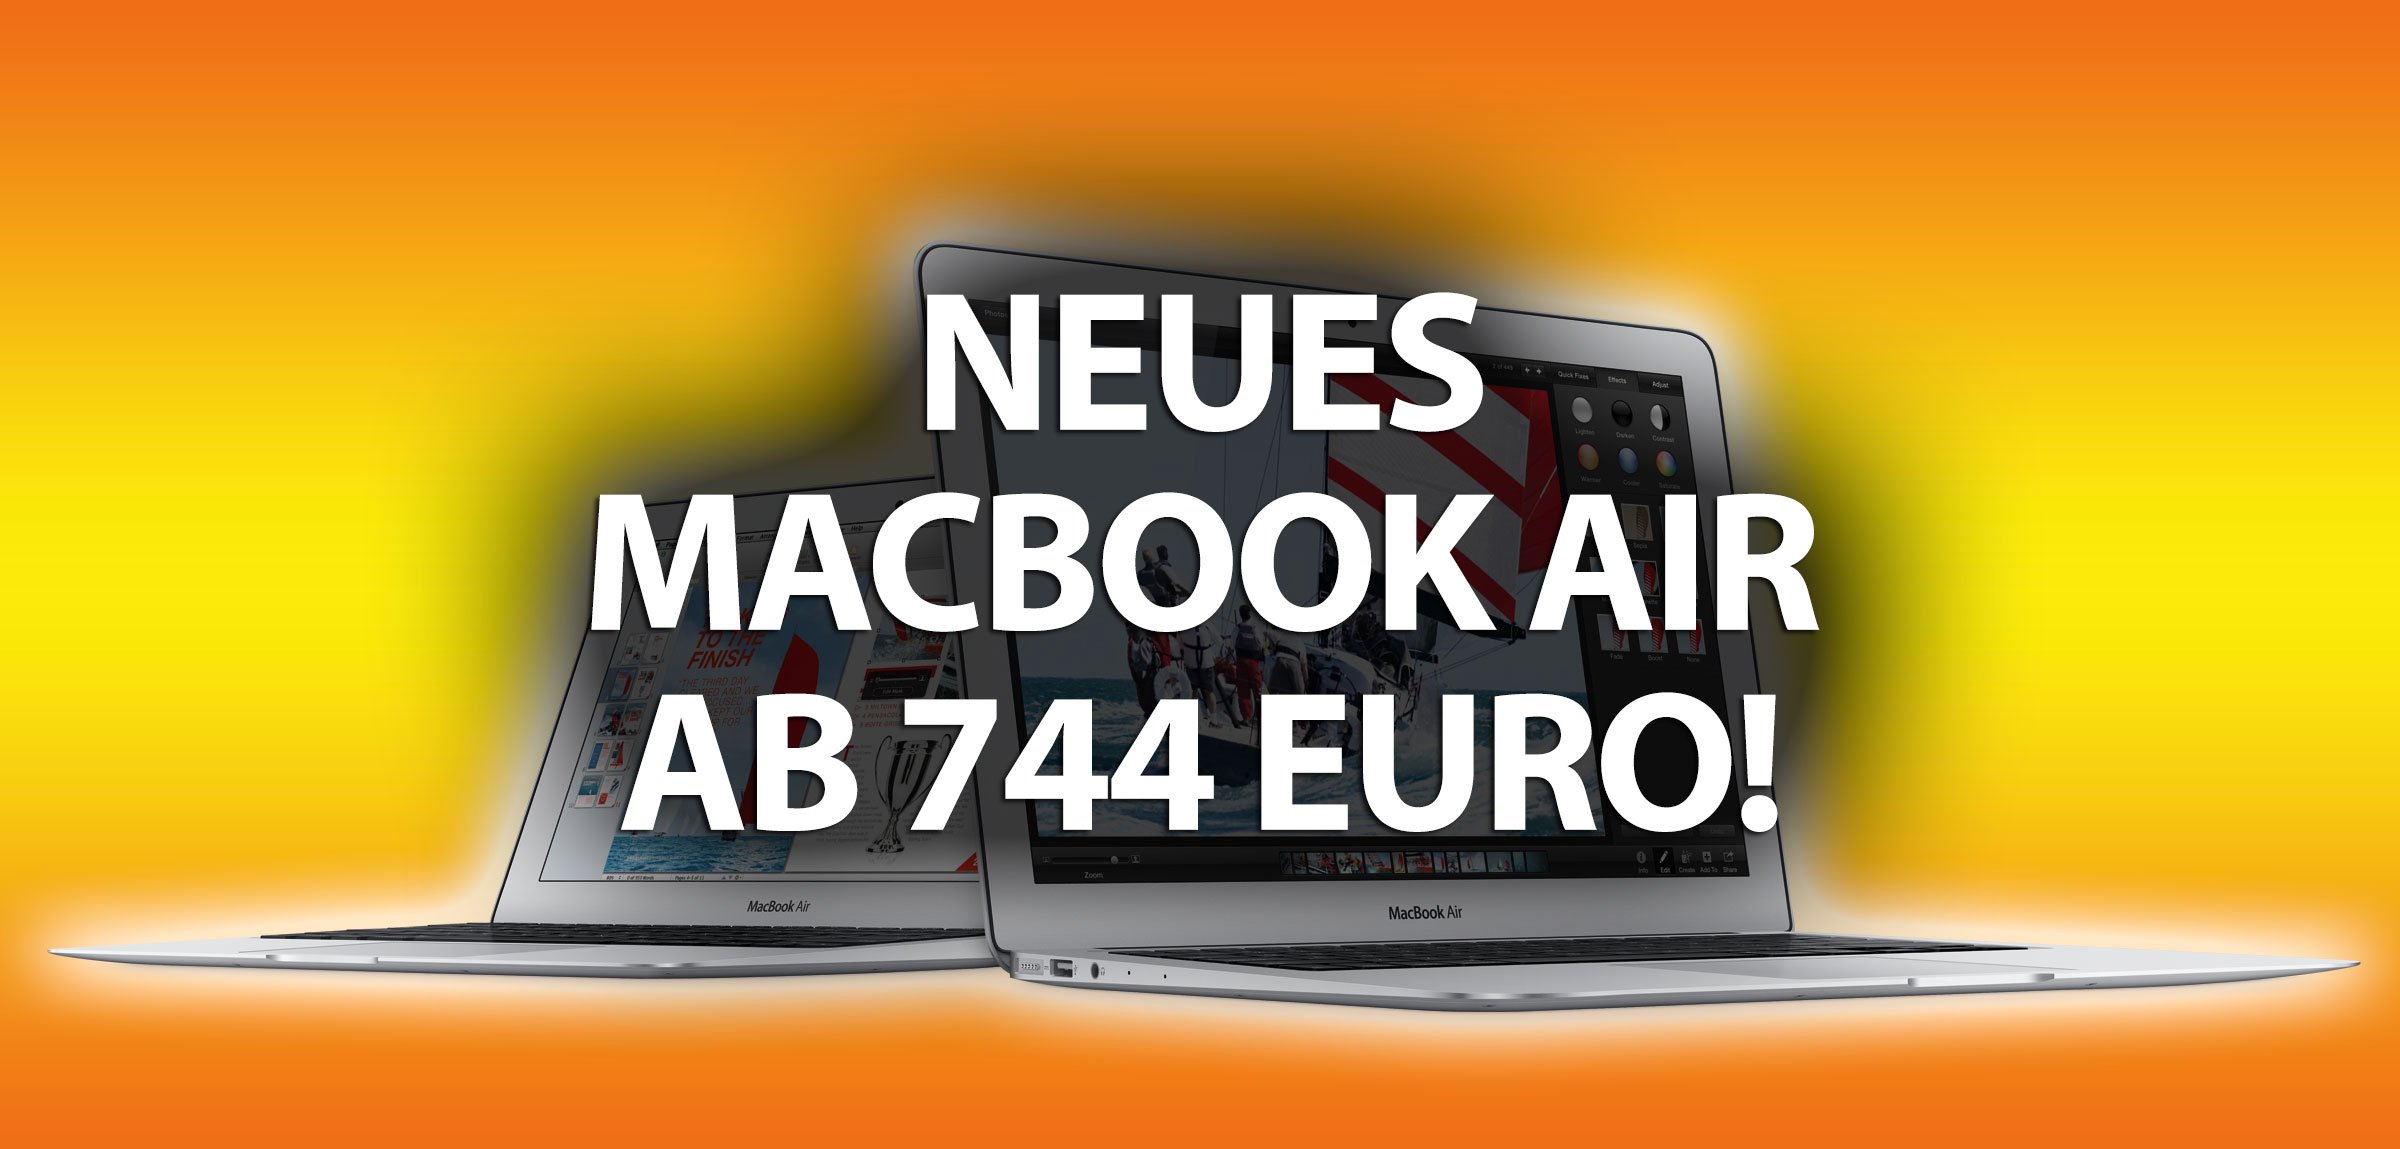 Neuer Rabattcode für Macbook Air 2014: Bester Preis! (Update: Studenten-Rabatt) 3